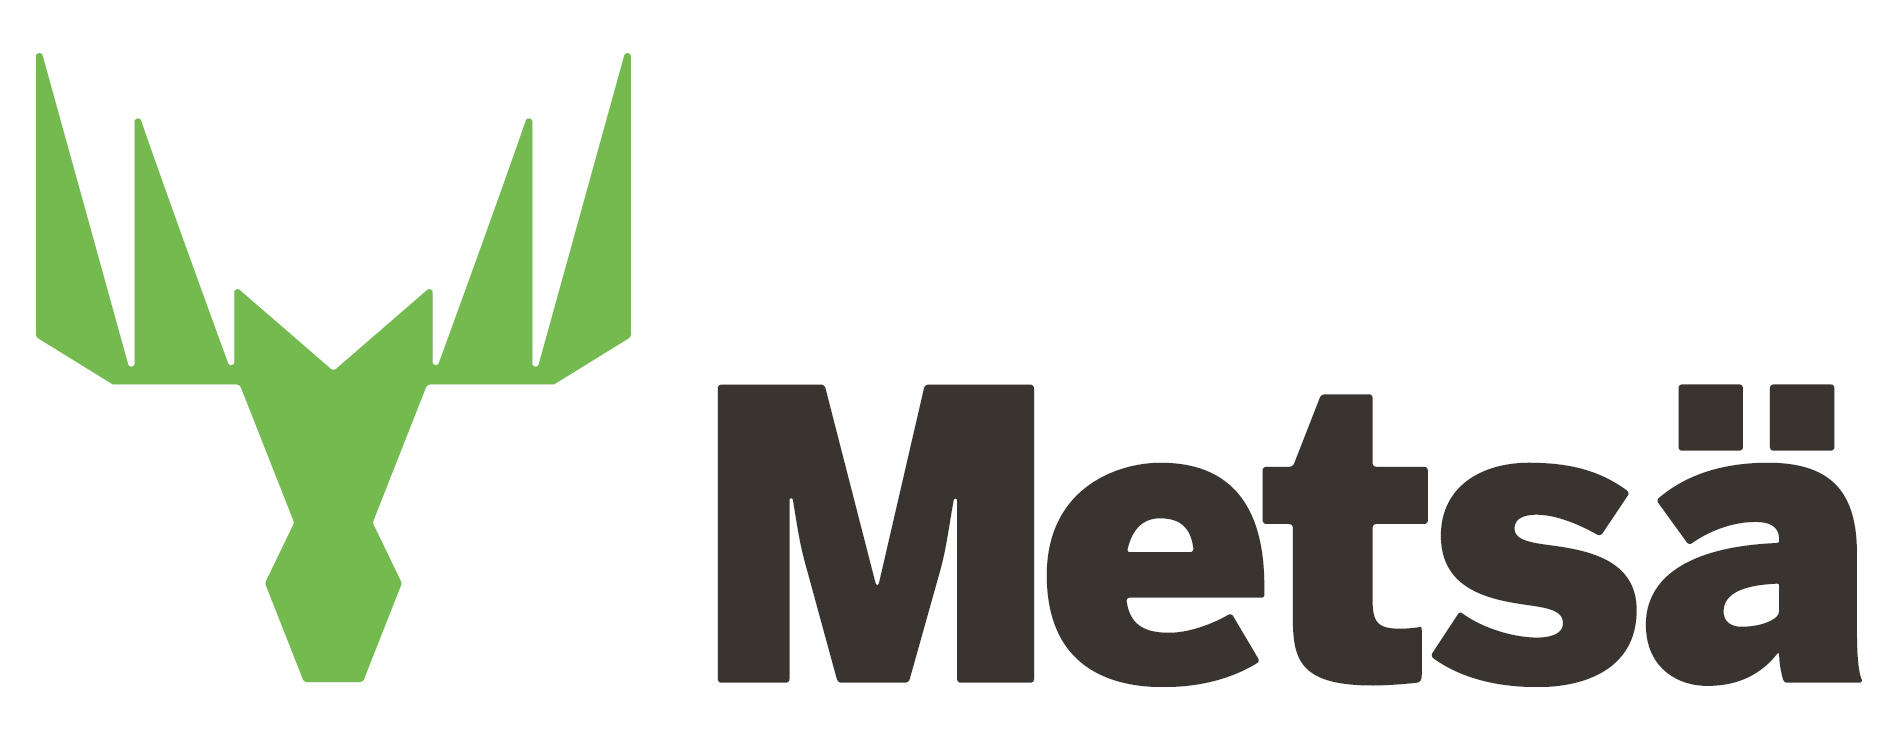 Mg logo 20212